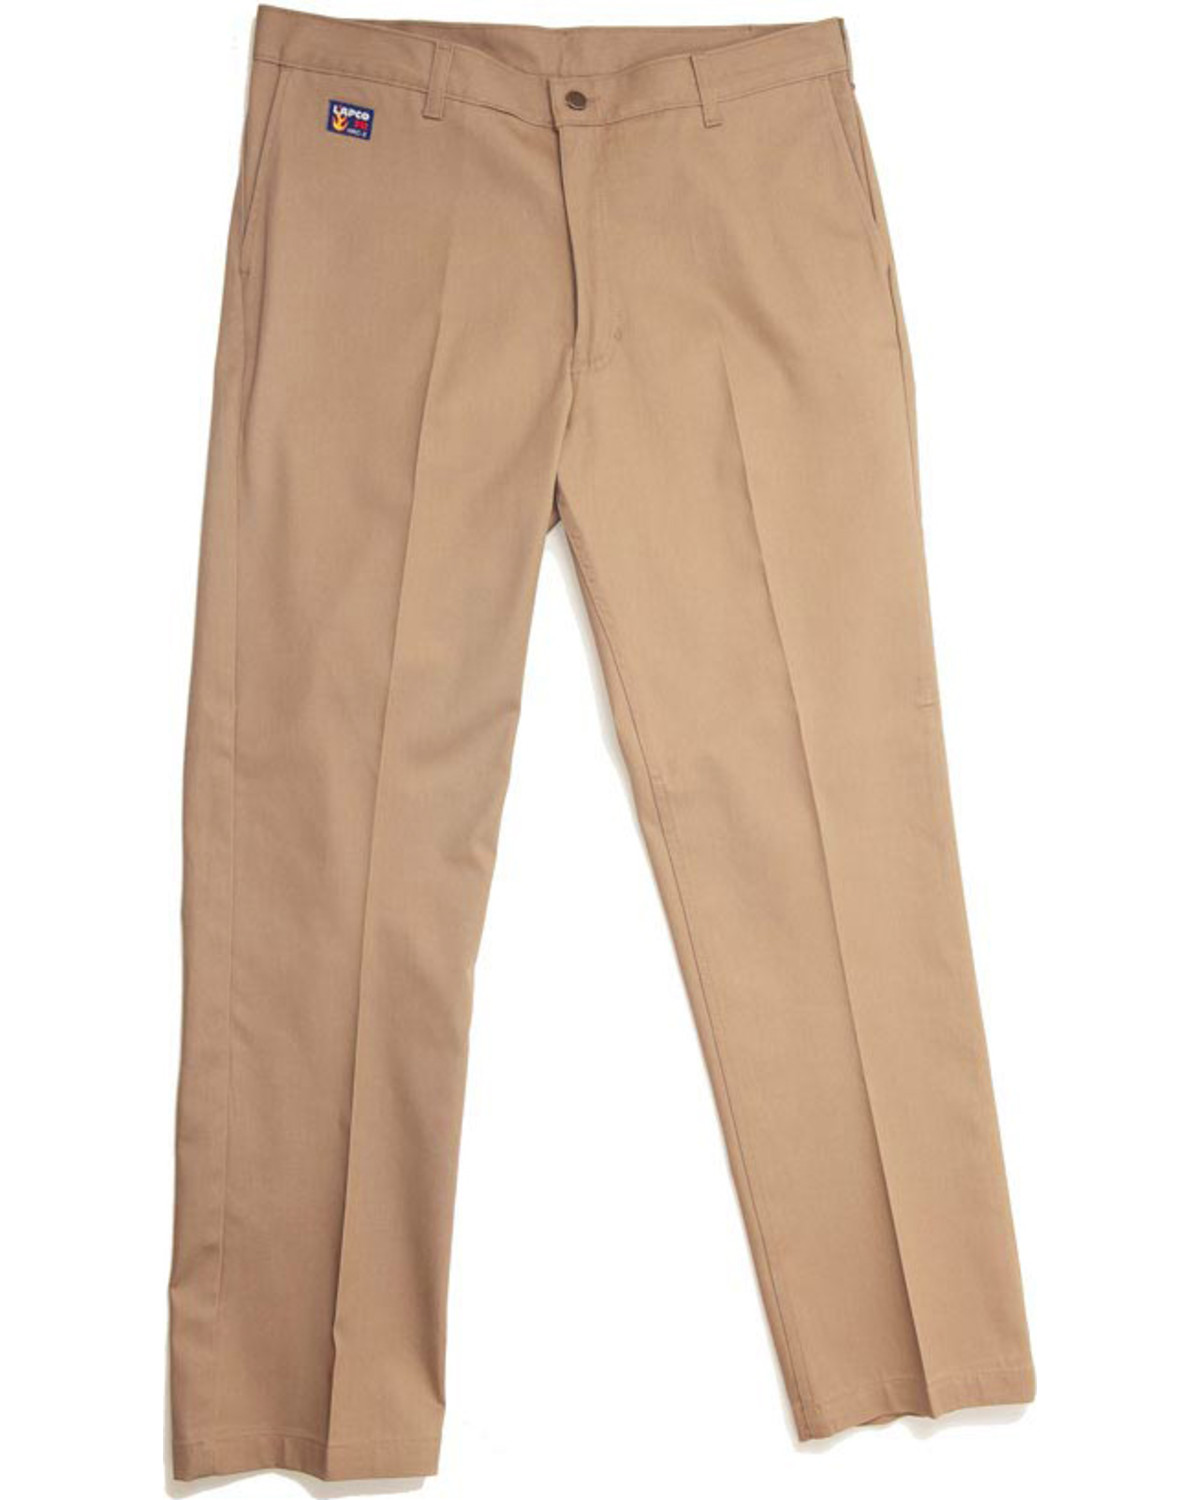 Lapco Men's Flame Resistant Work Pants